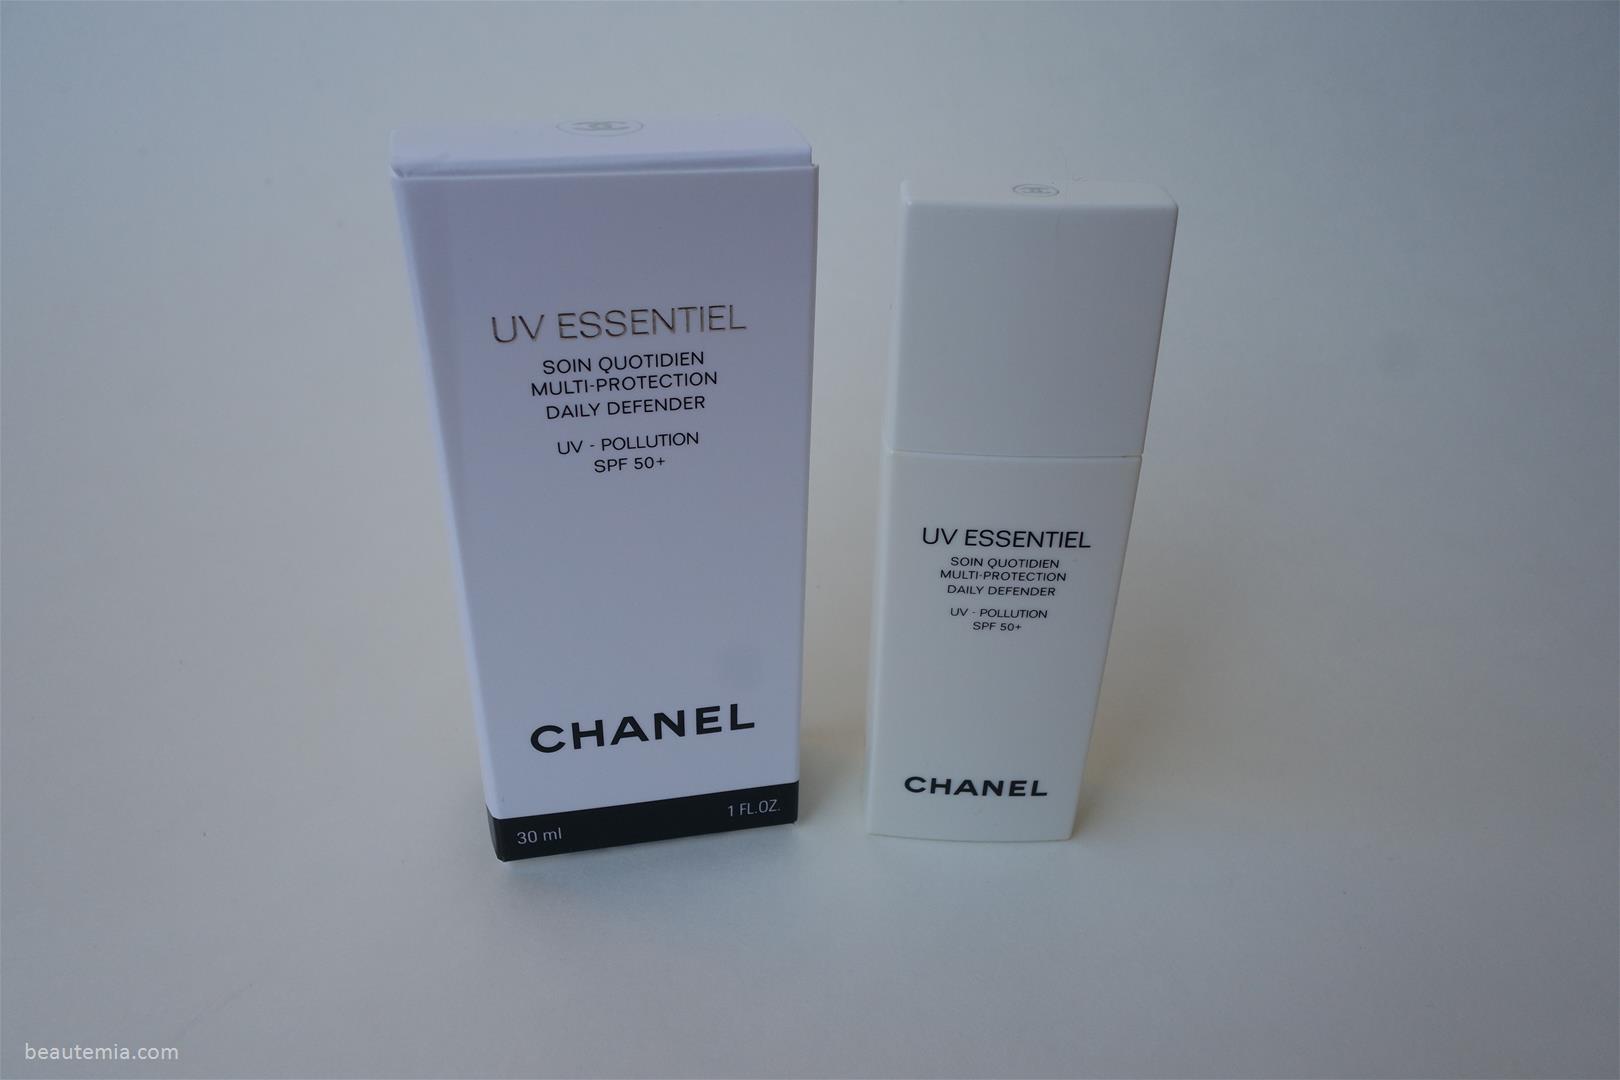 Chanel UV Essentiel Multi-Protection Daily Defender Gel-Creme SPF